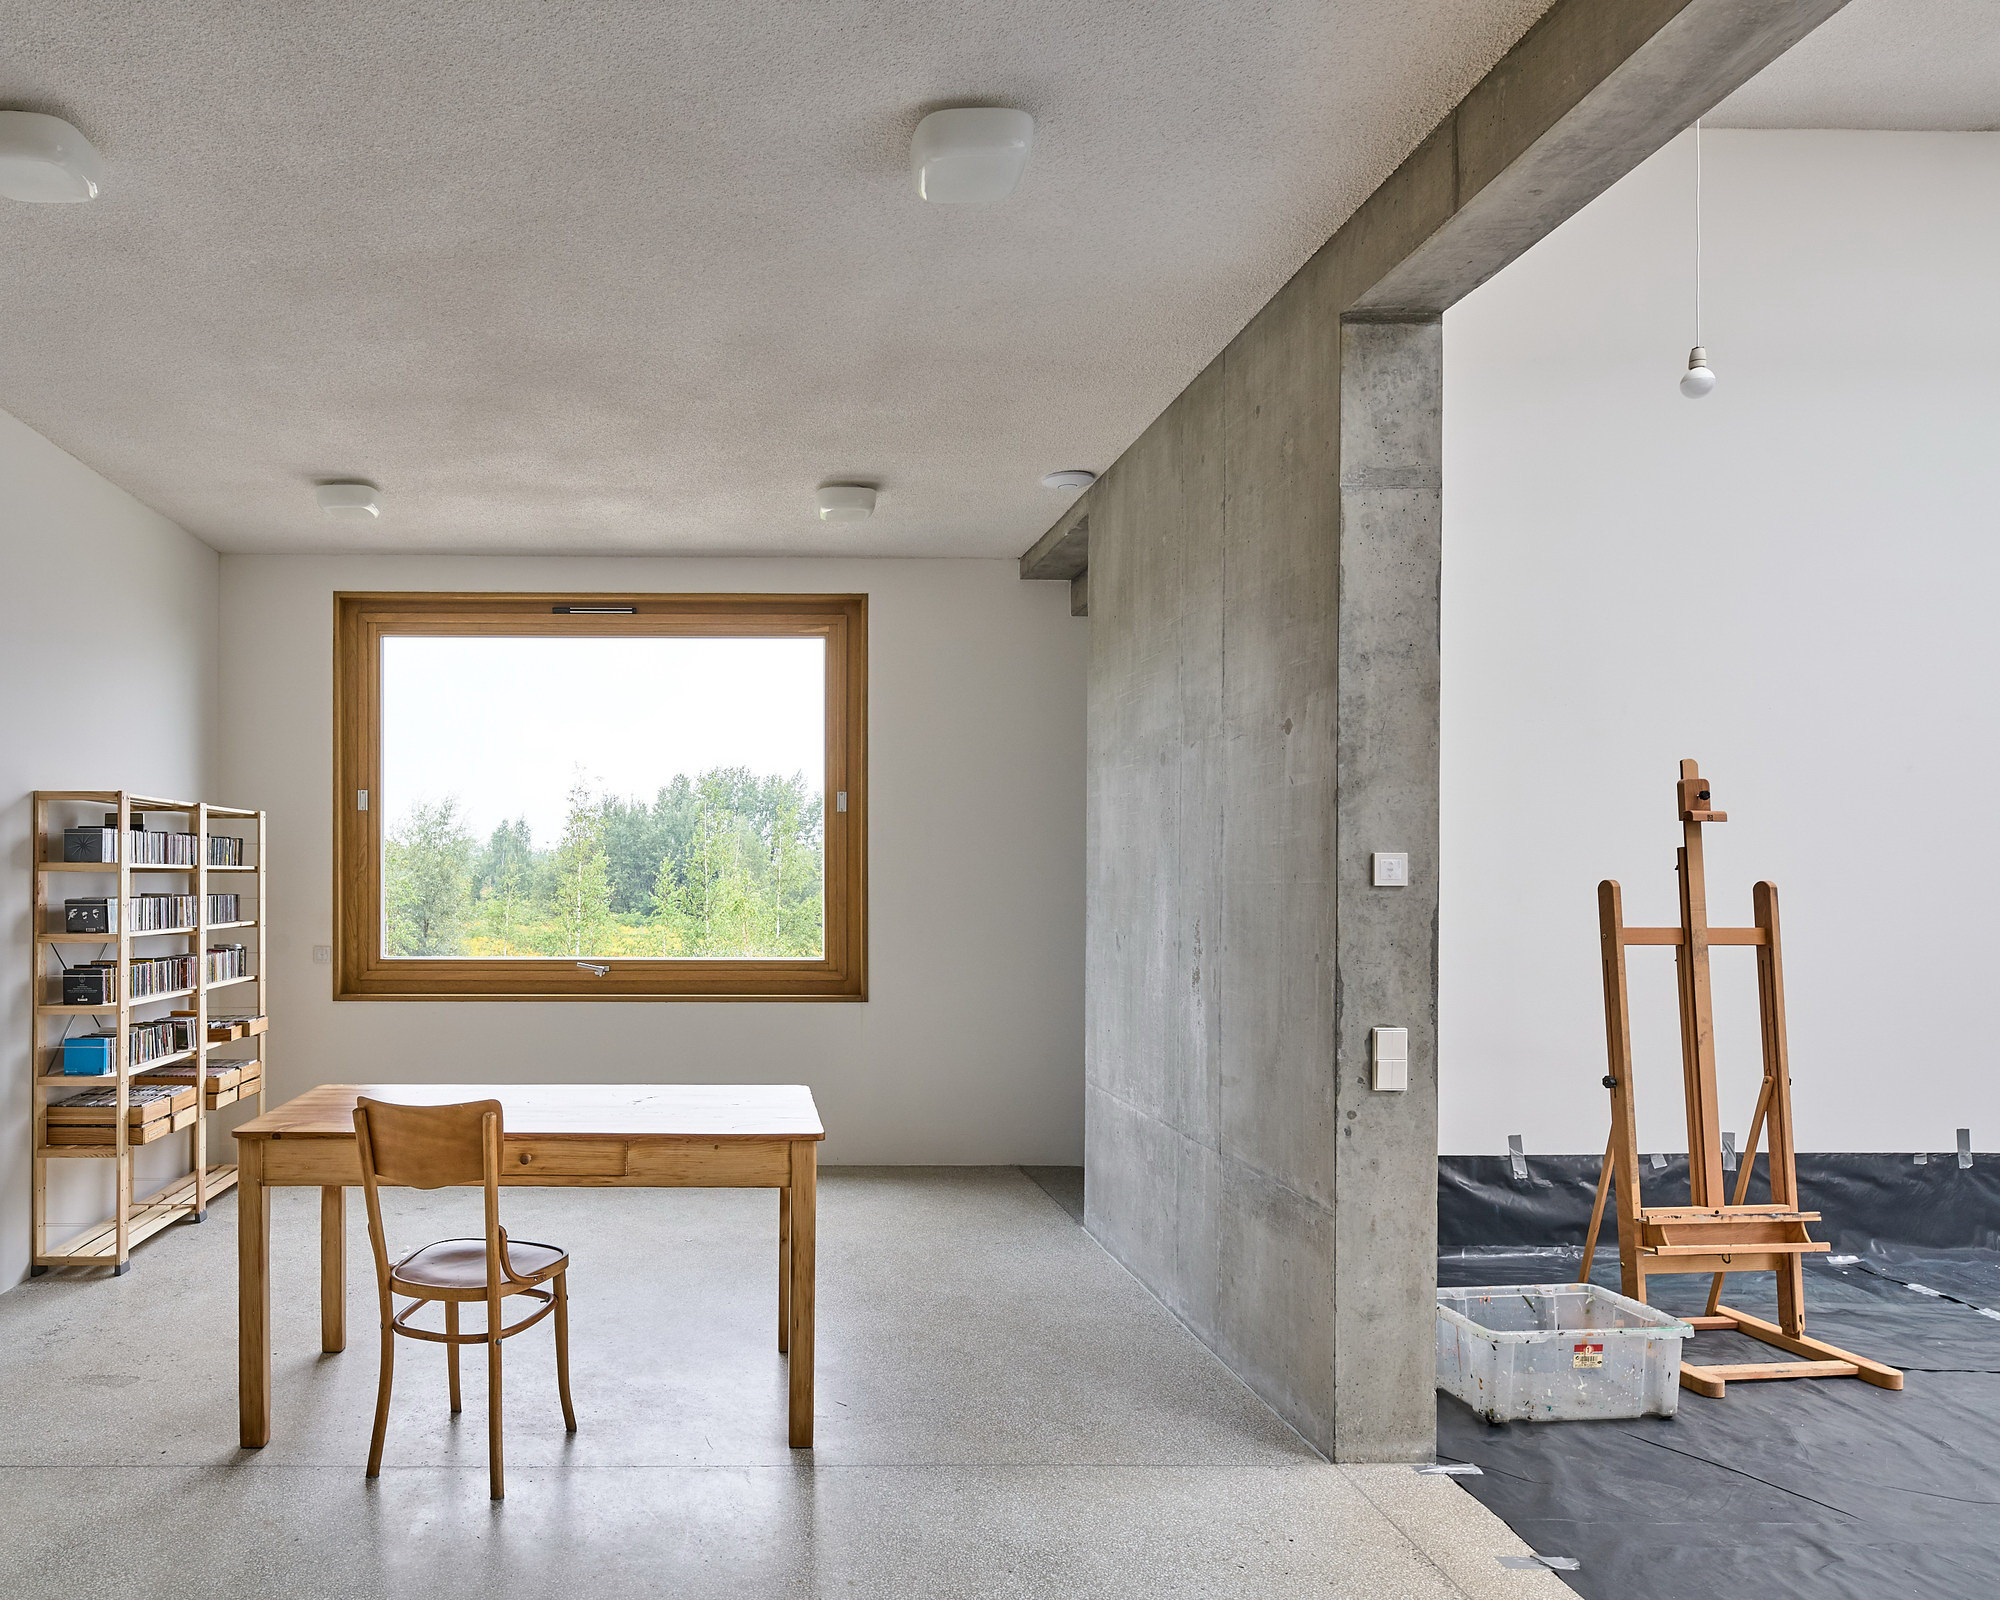 Artists’ Home and Studio by Piotr Brzoza Architekten